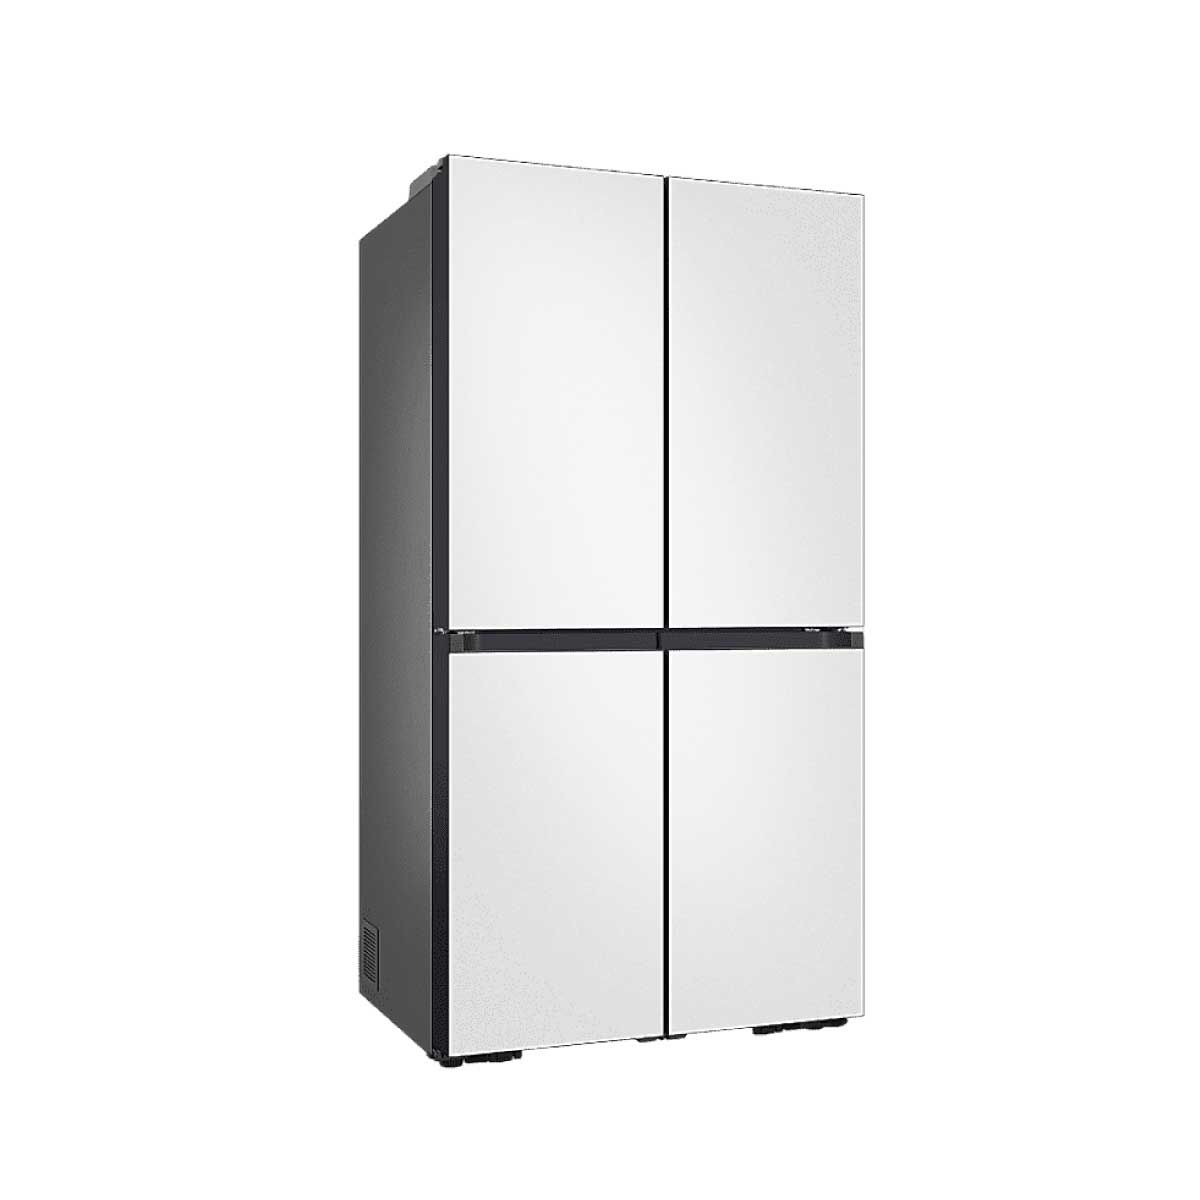 SAMSUNG ตู้เย็น French Door  Bespoke Design 22.7 Q / 649 L รุ่น RF59CB001AP/ST สี ขาว/ขาว